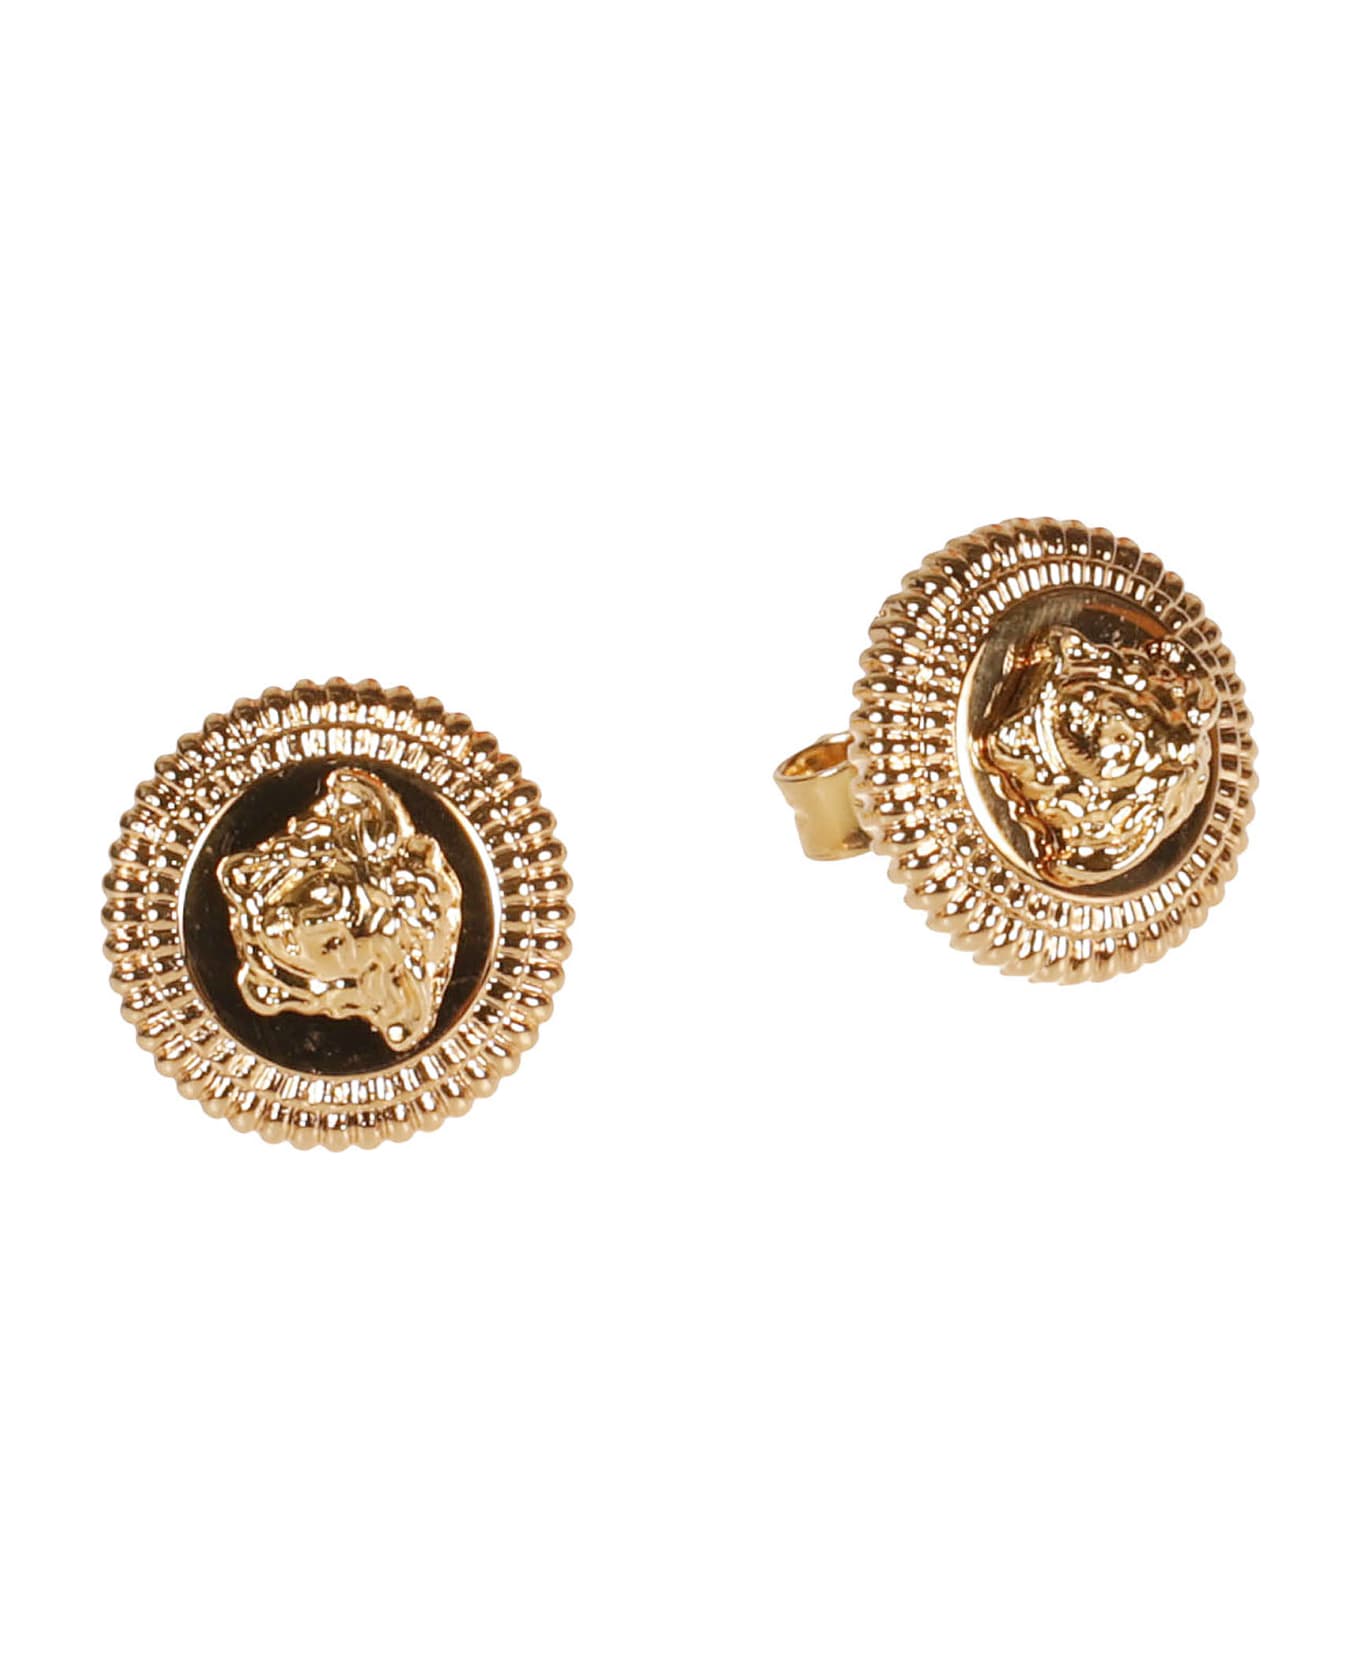 Versace Medusa Head Earrings - Gold